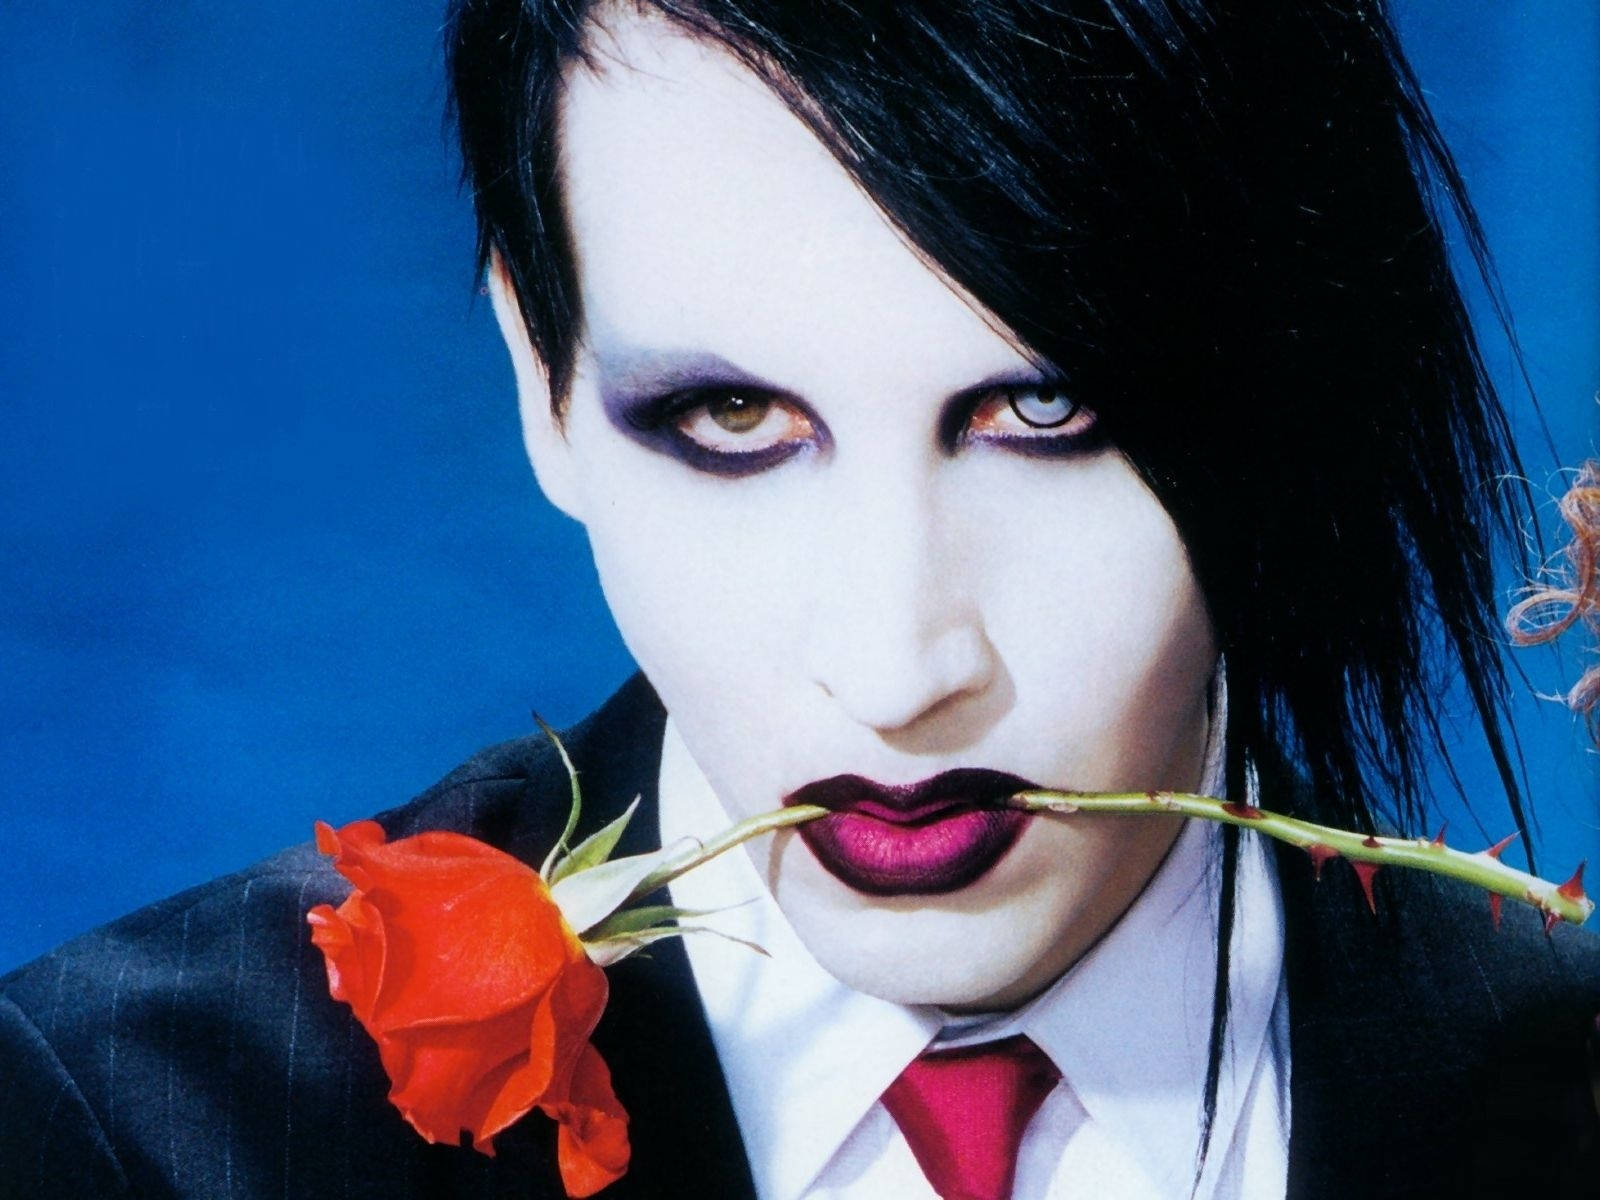 “Marilyn Manson viser sin ikoniske udseende og stil” Wallpaper